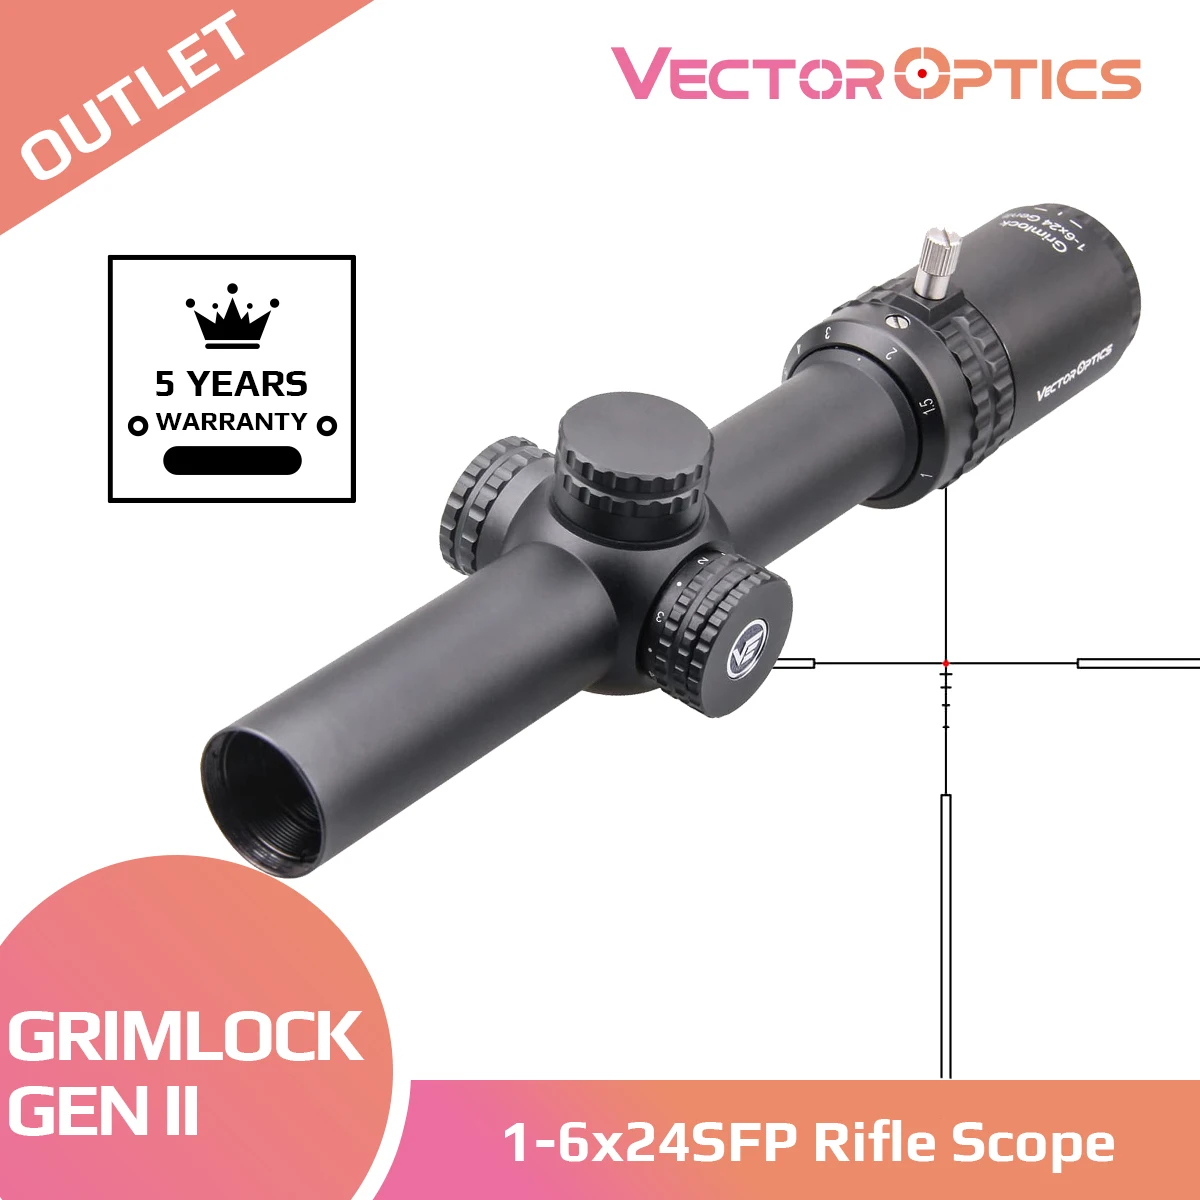 Vector Optics Grimlock 1-6x24SFP GenII Riflescope Wide F.O.V 1 